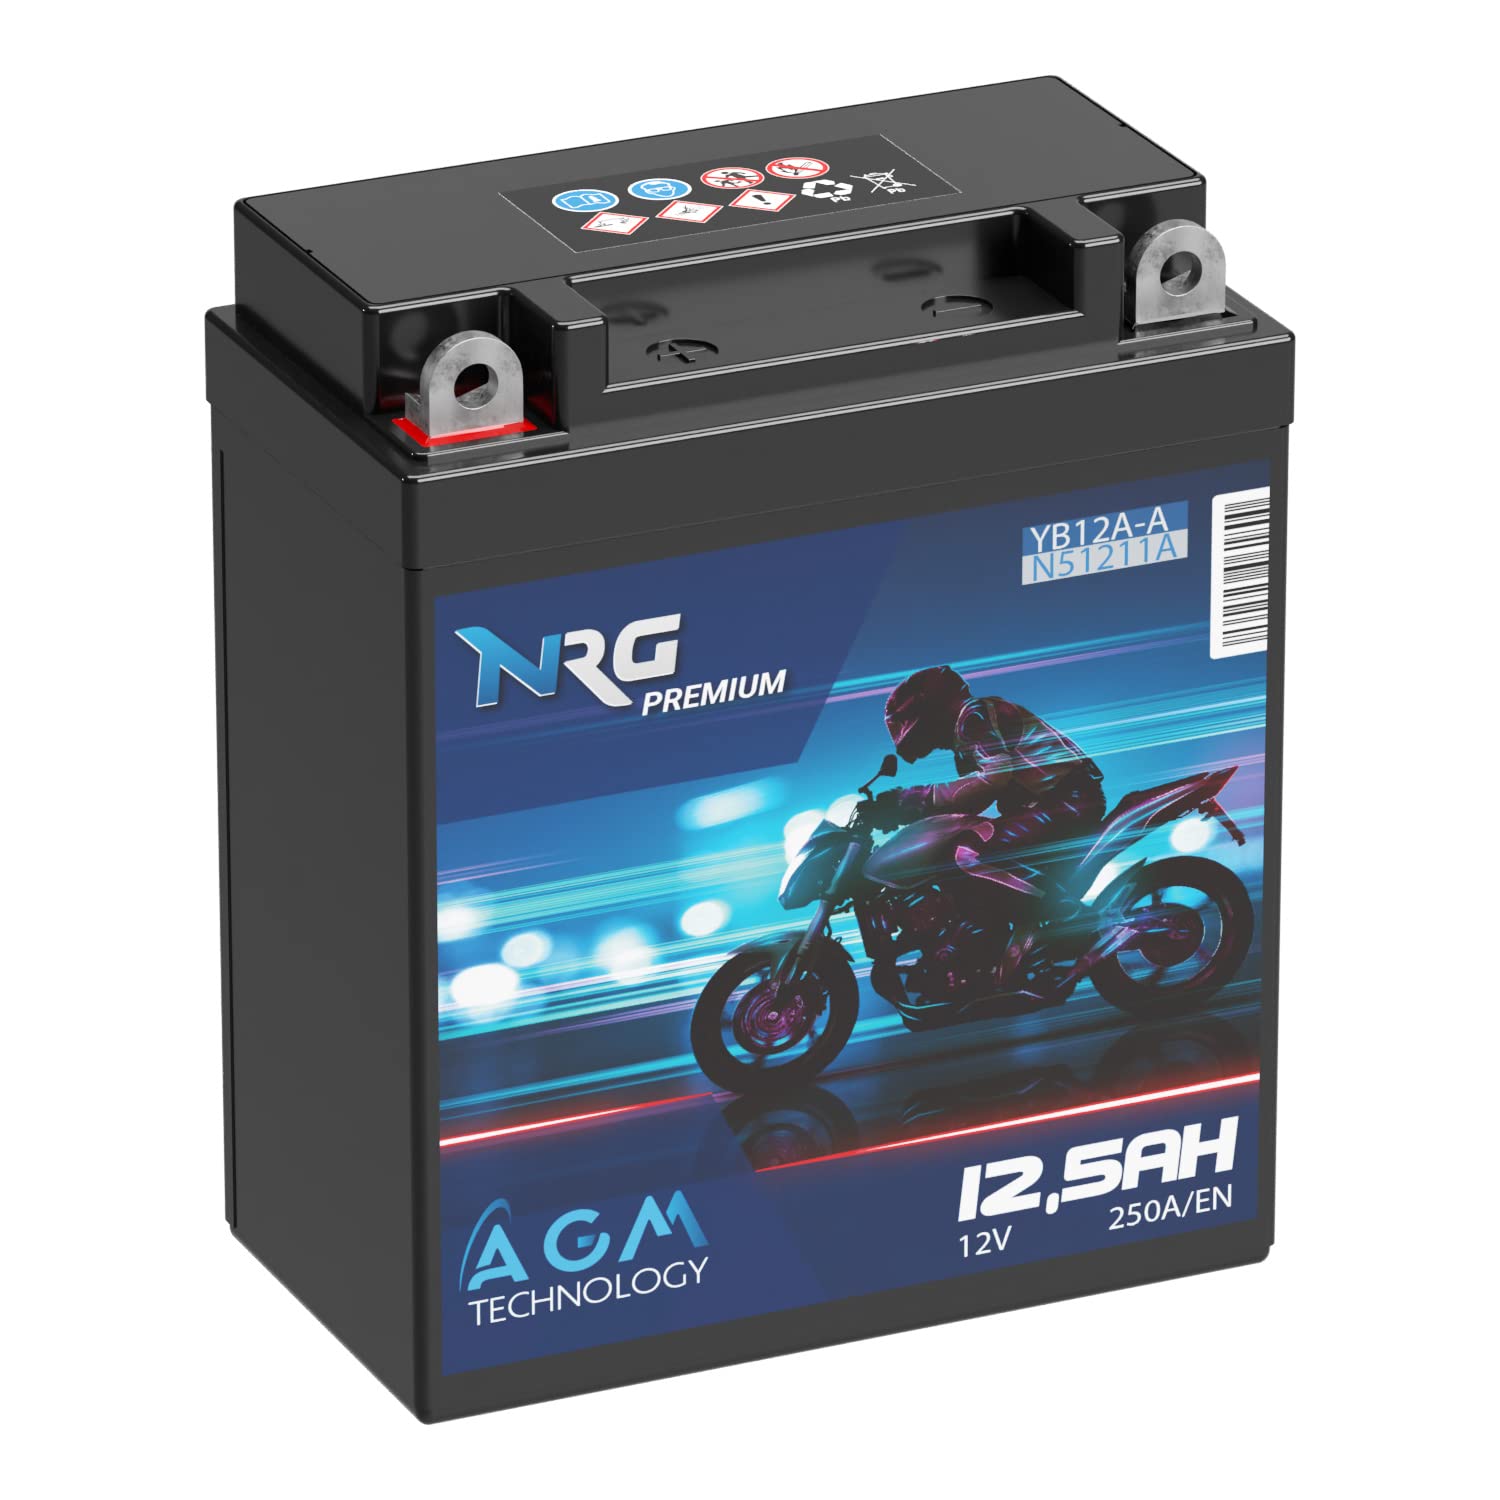 NRG PREMIUM YB12A-A AGM Motorradbatterie 12V 12,5Ah 250A/EN 51211 YB12A-B CB12A-A AGM Batterie 12V doppelte Lebensdauer vorgeladen auslaufsicher wartungsfrei ersetzt 10Ah von NRG PREMIUM